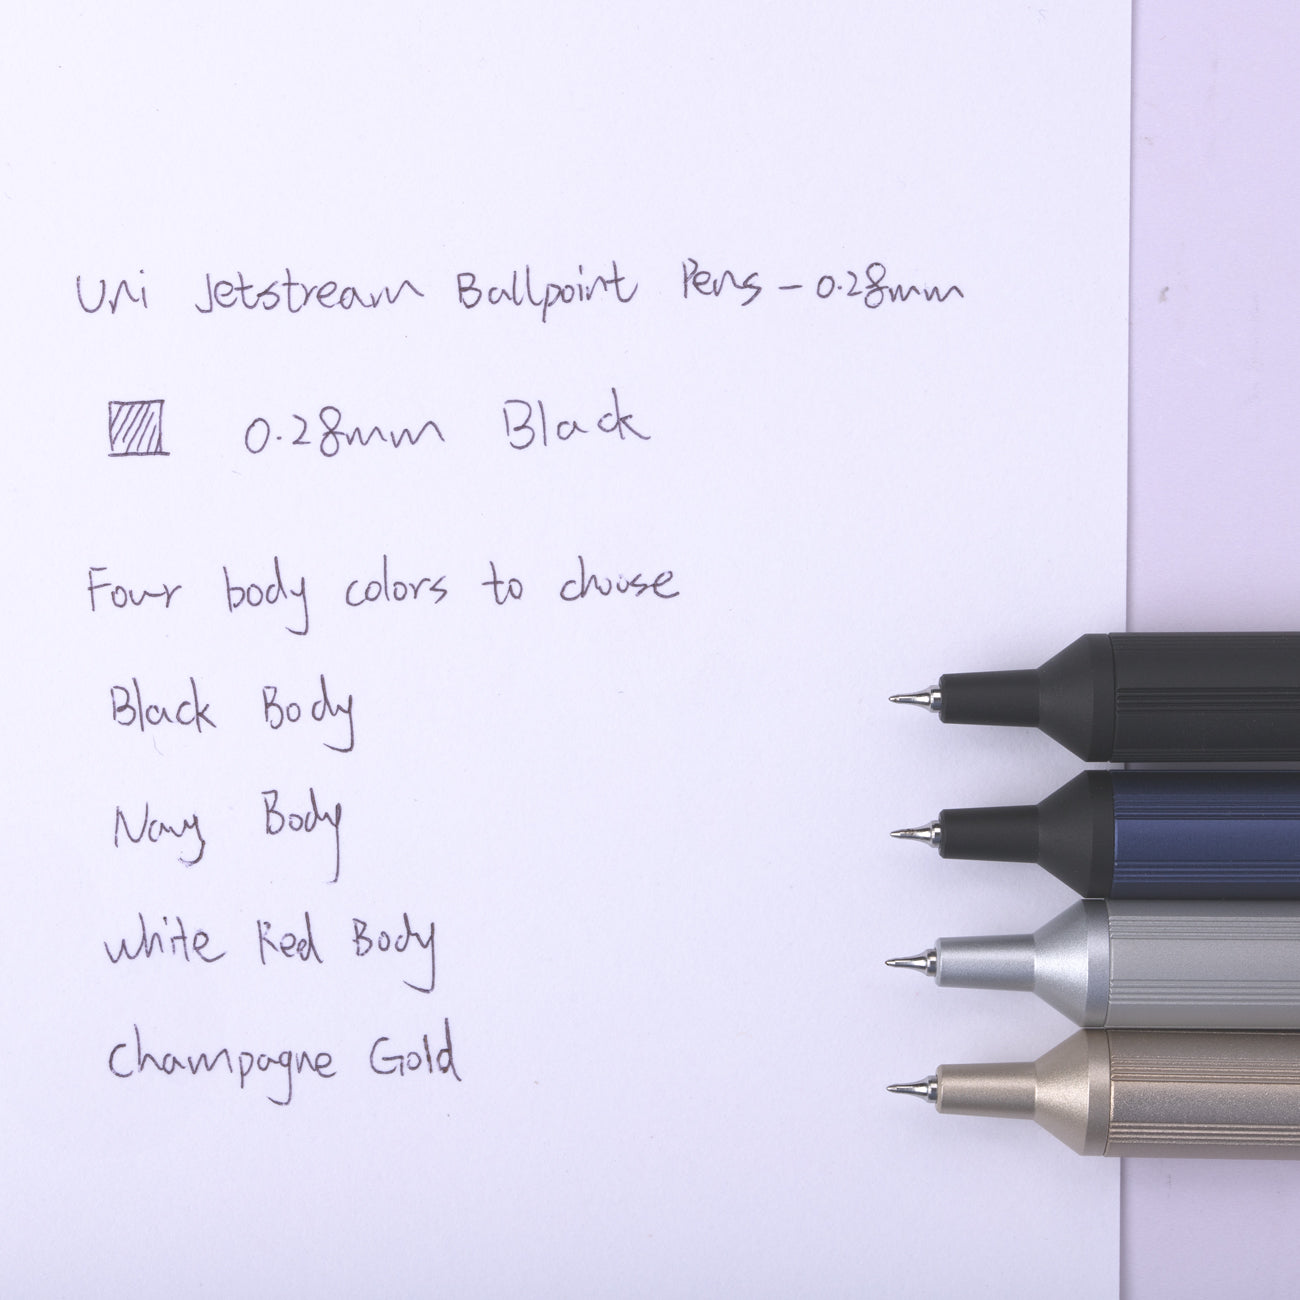 Uni Jetstream Edge Ballpoint Pen - 0.28 mm - Champagne Gold Body